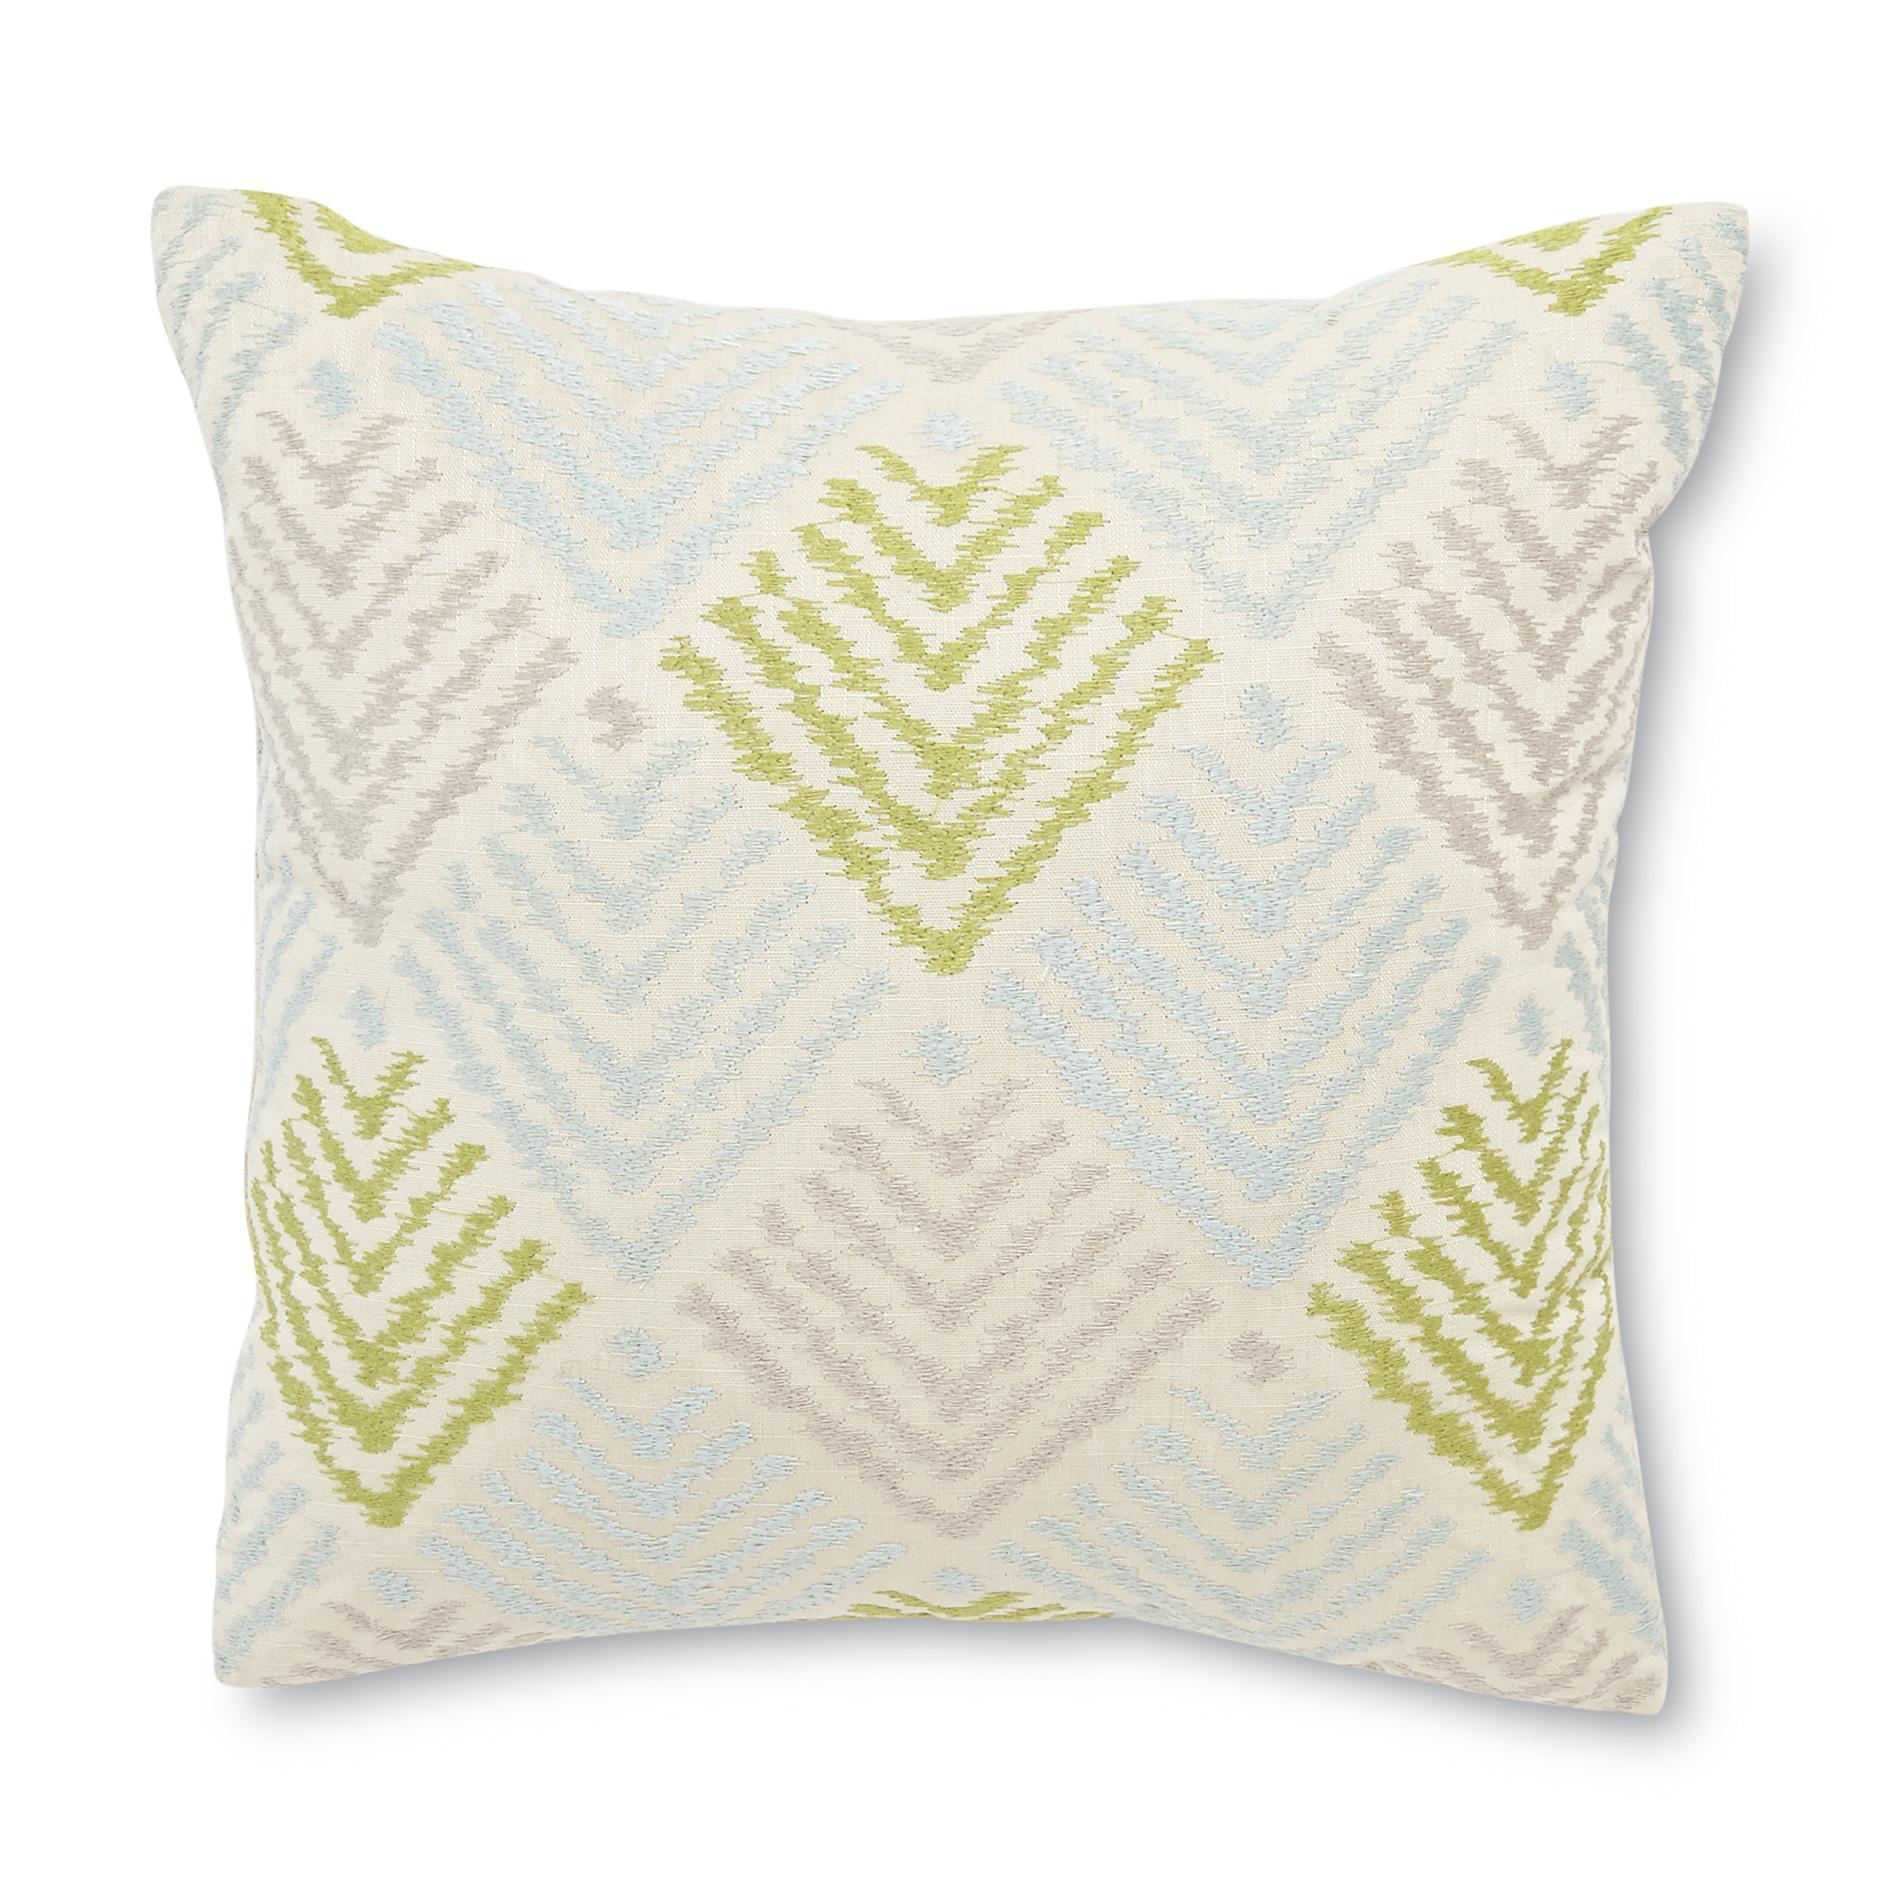 Rectangular Embellished Accent Pillow